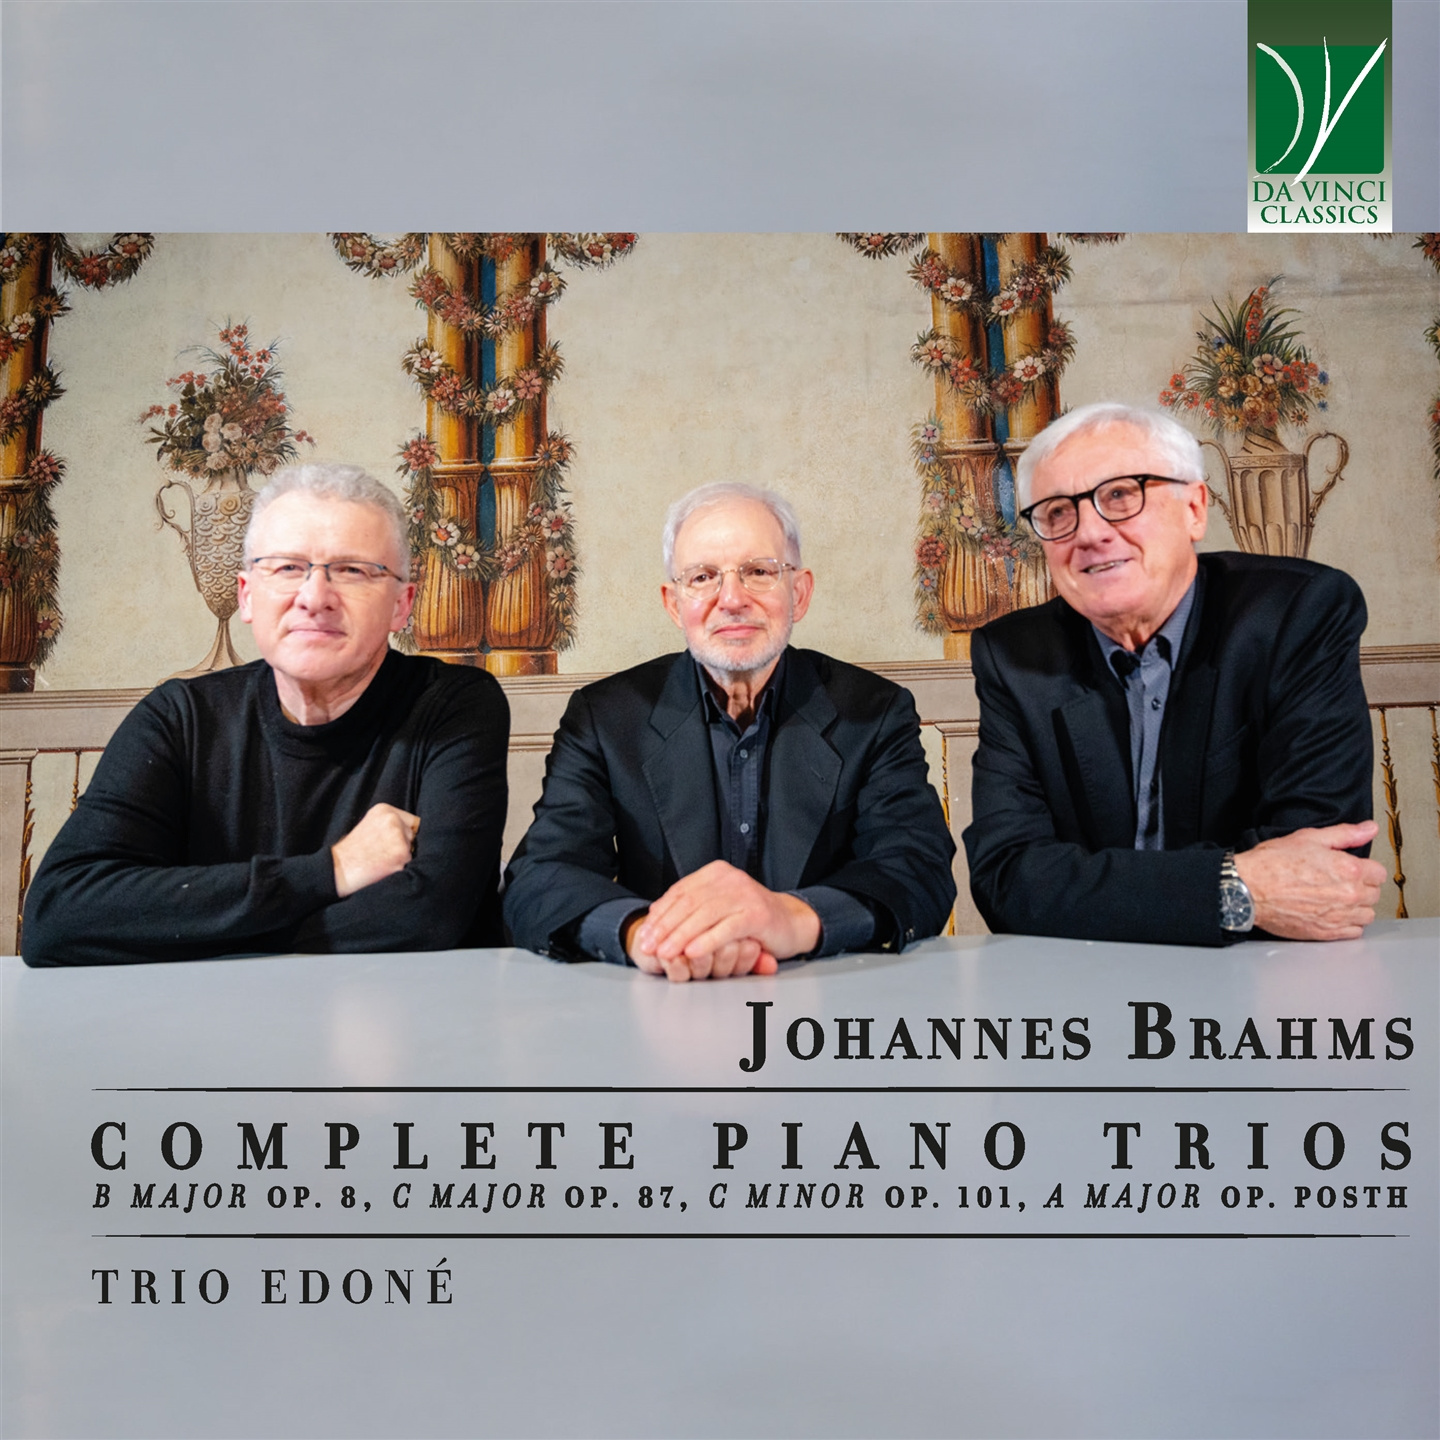 JOHANNES BRAHMS: COMPLETE PIANO TRIOS